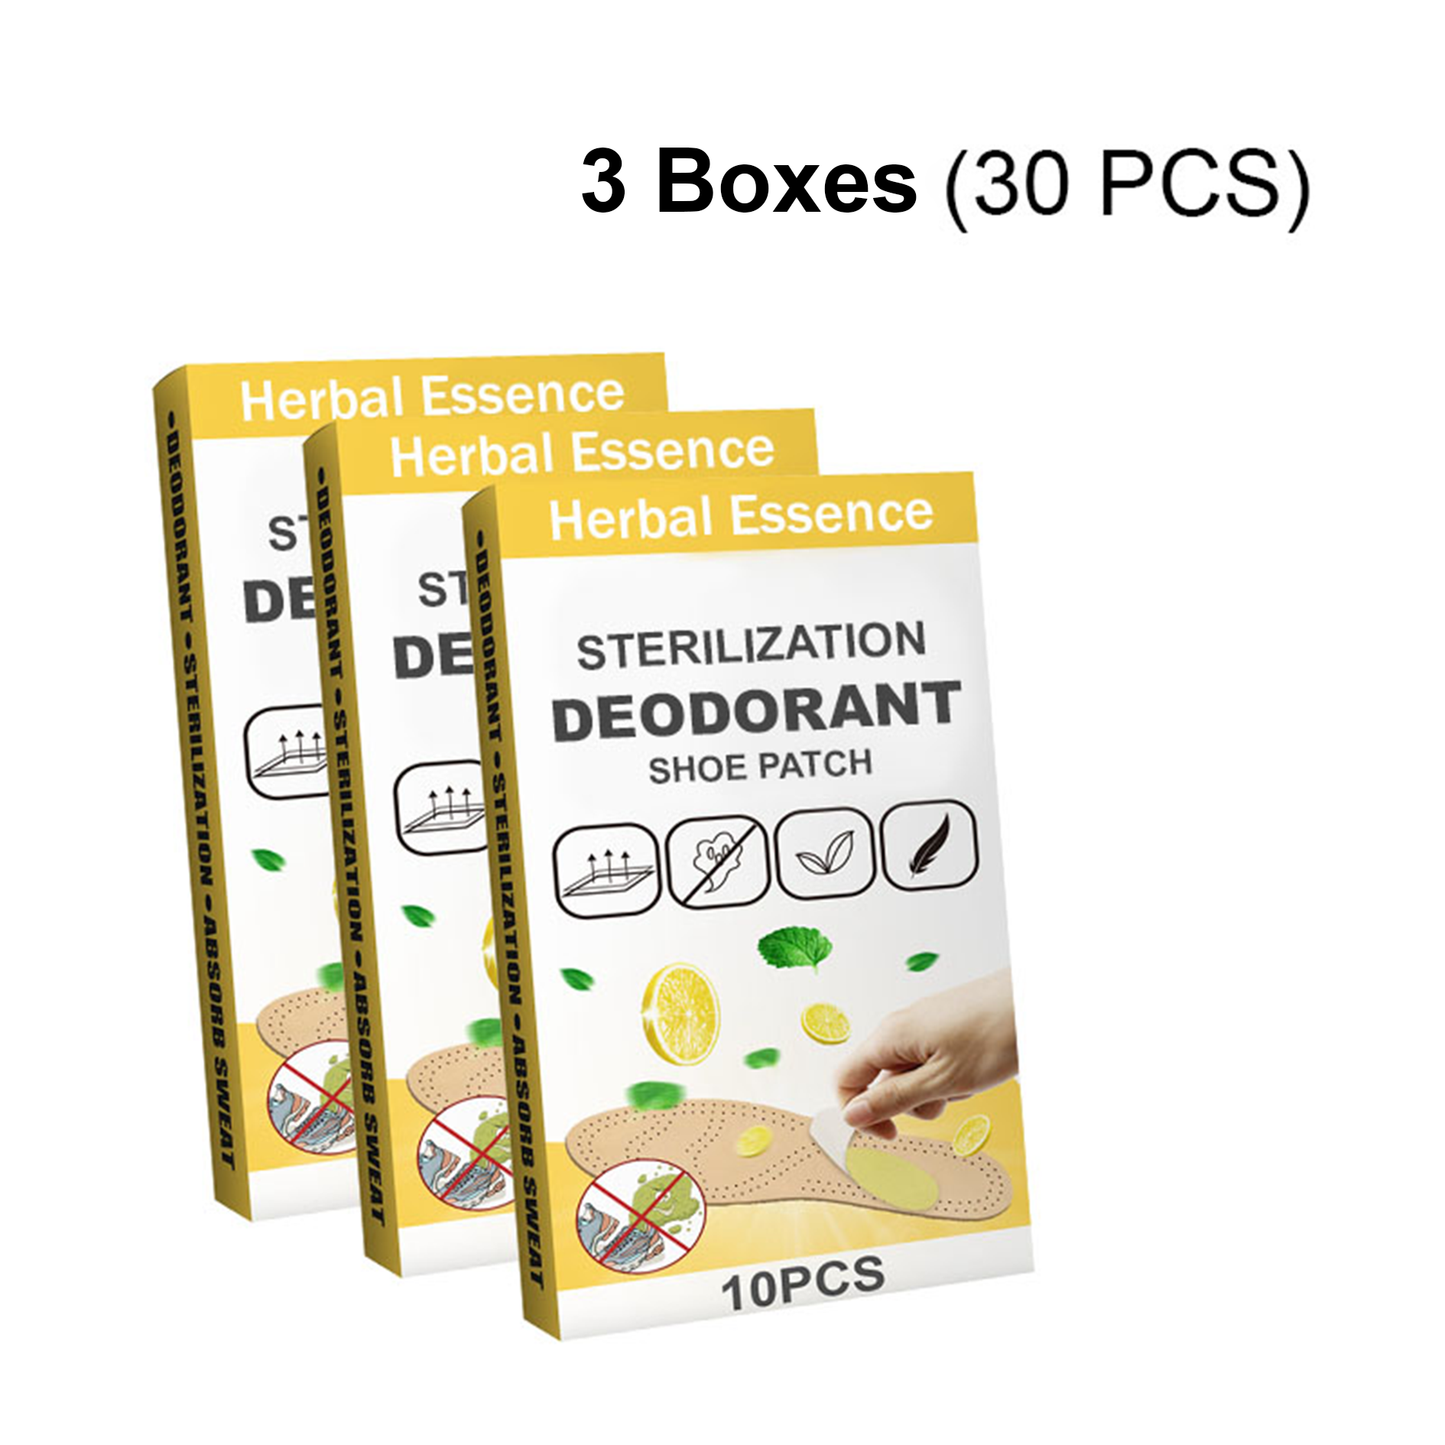 Herbal Essence Deodorant Shoe Patch